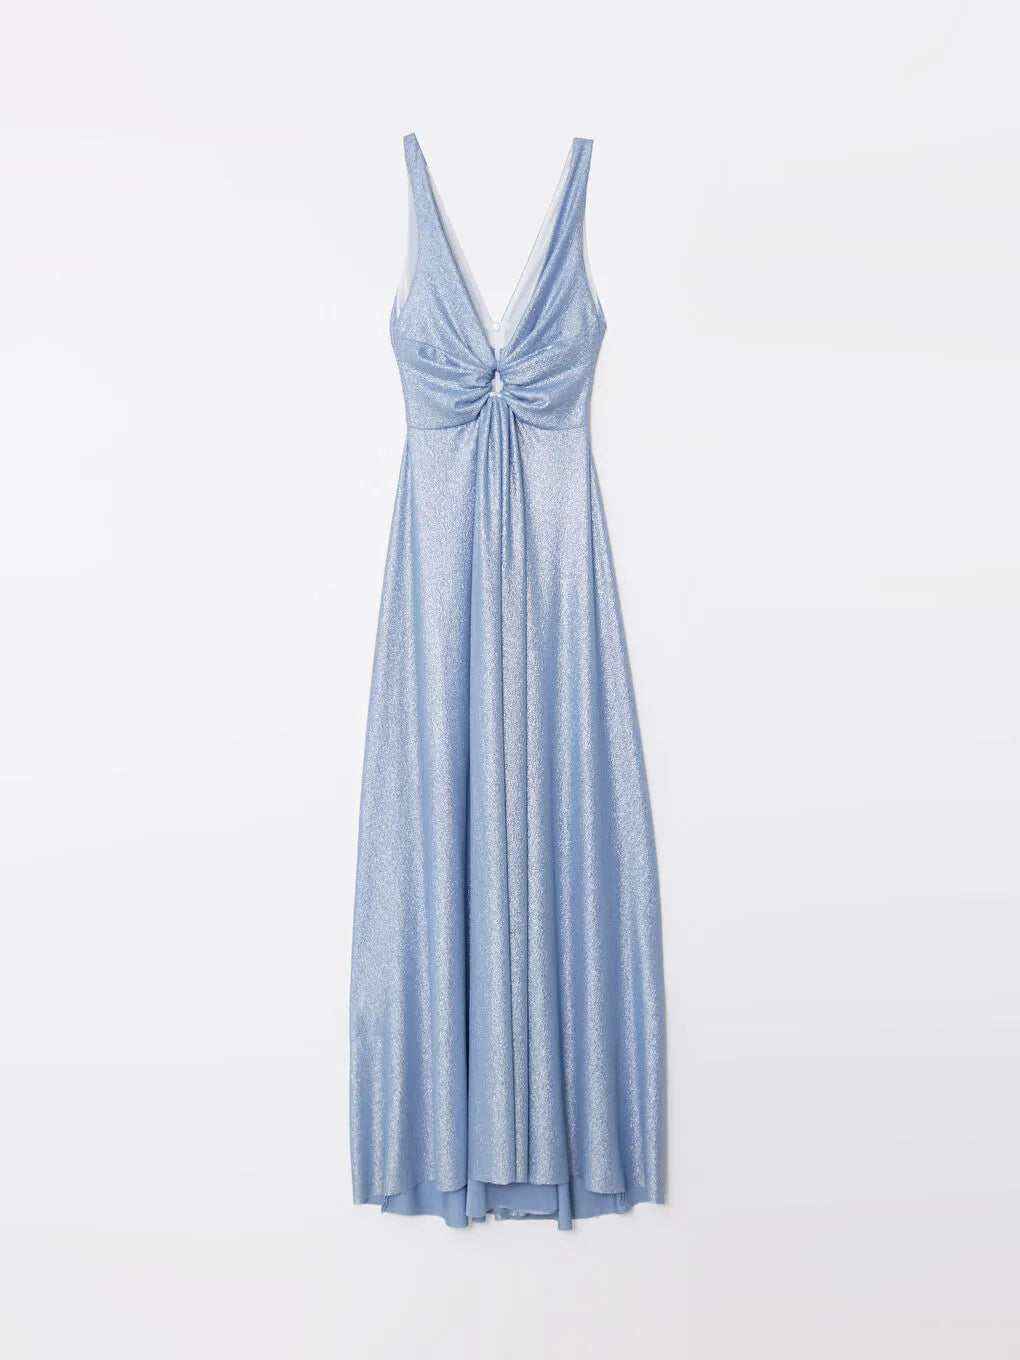 SLAY IN SHIMMERY BLUE LONG FLARE DRESS